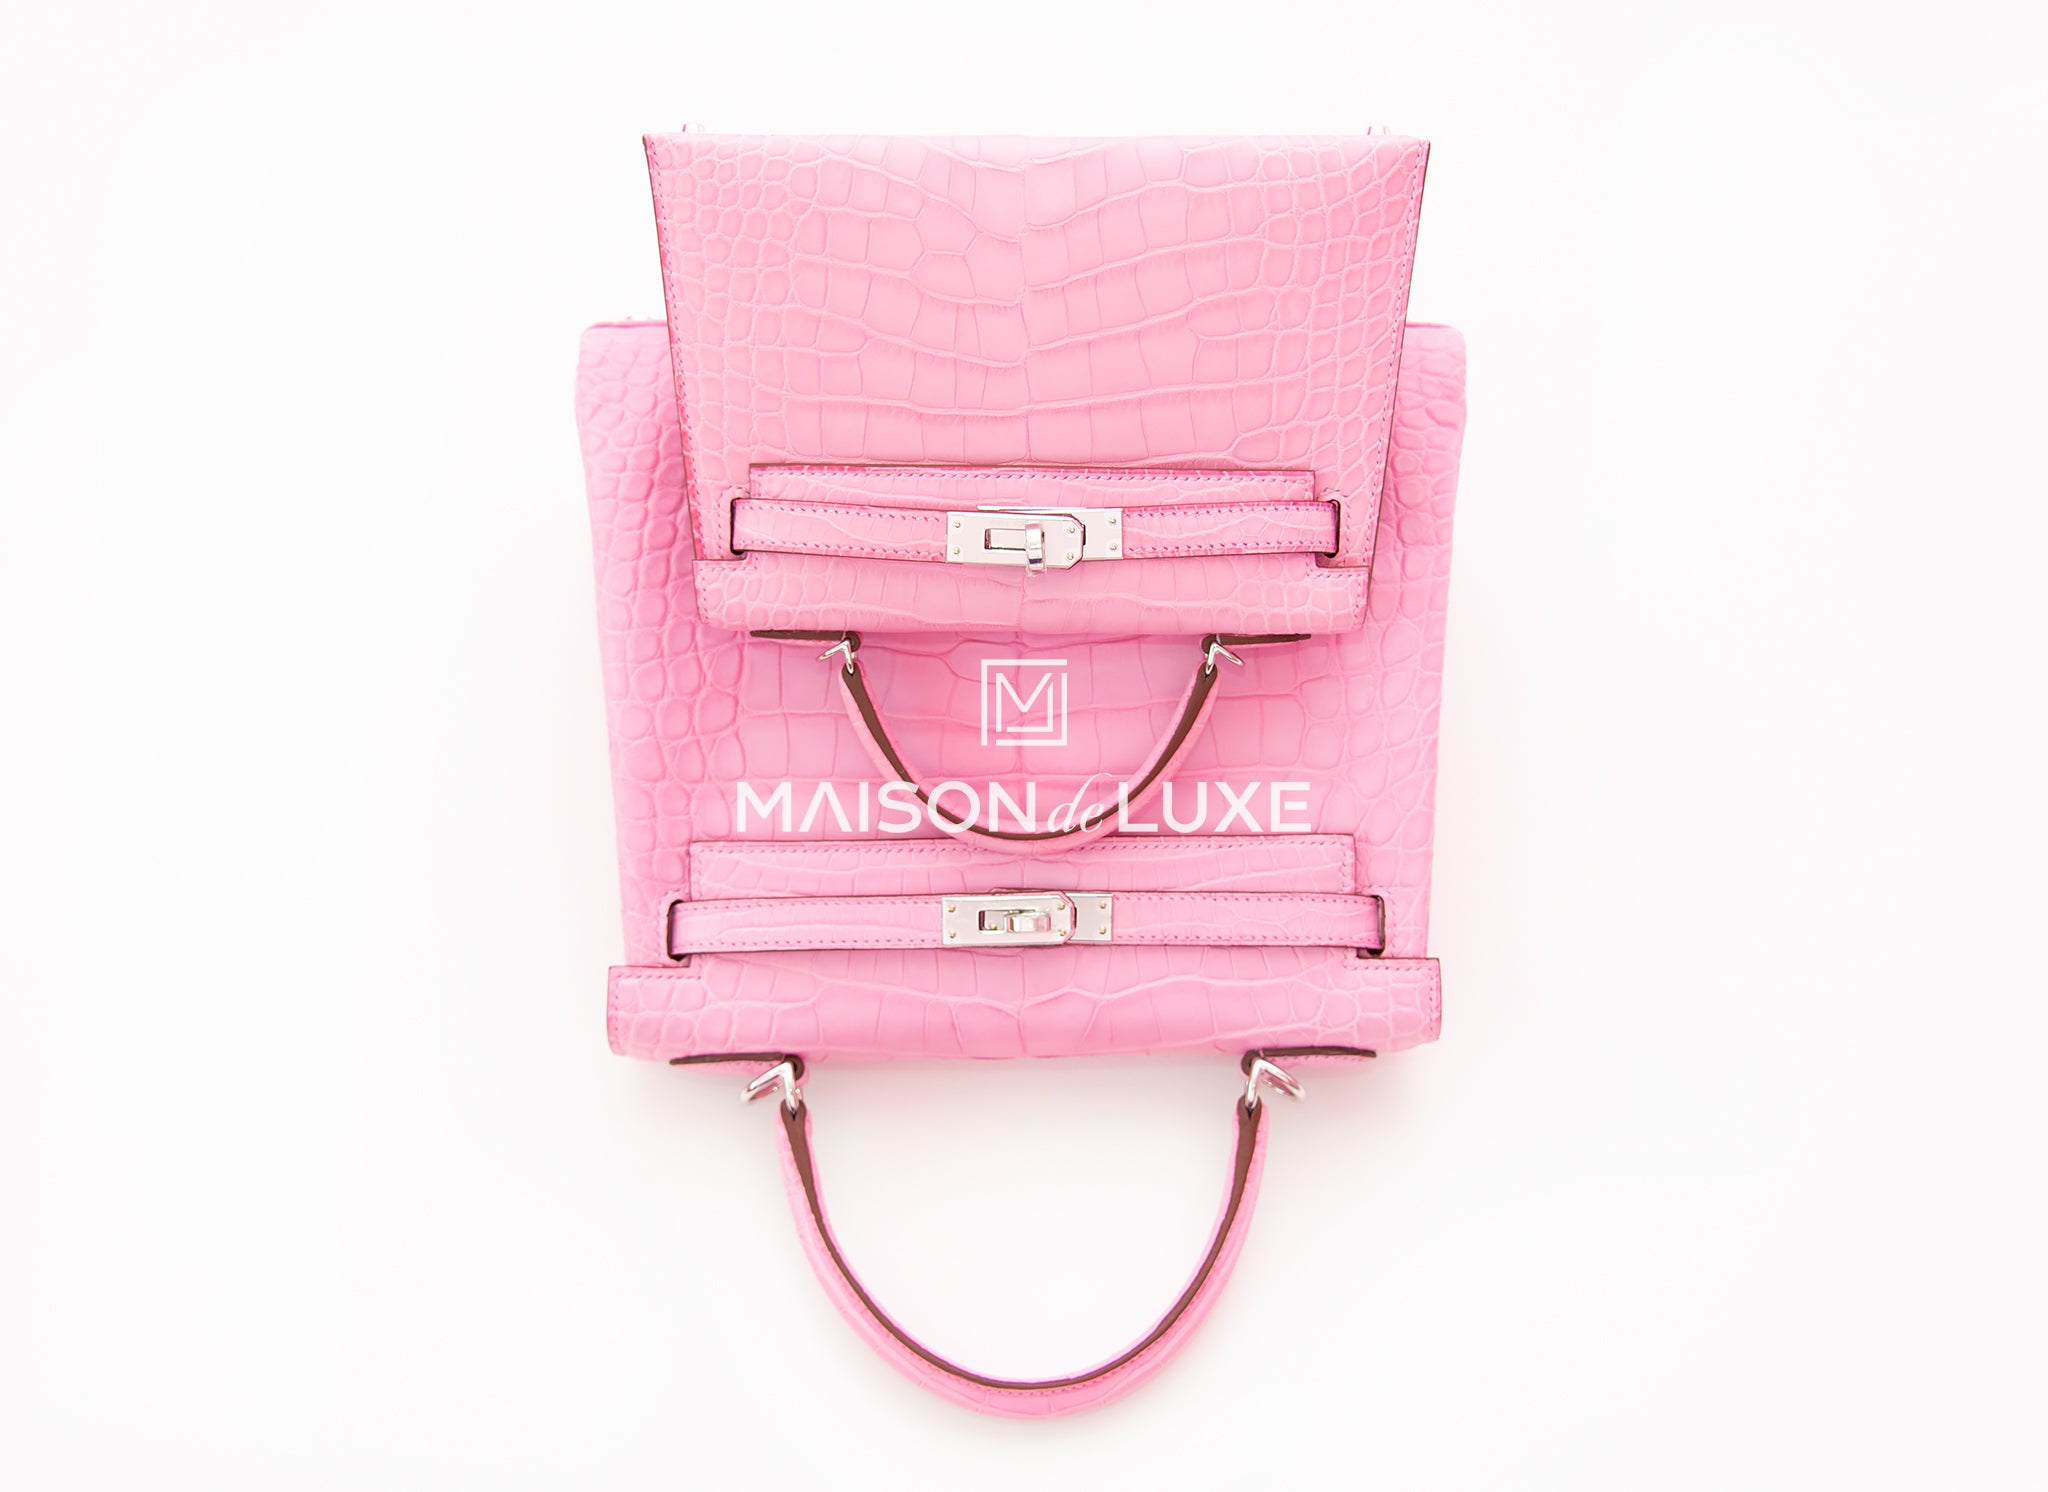 Hermes Birkin 25 Handbag 5P Pink Matte Porosus Croc SHW